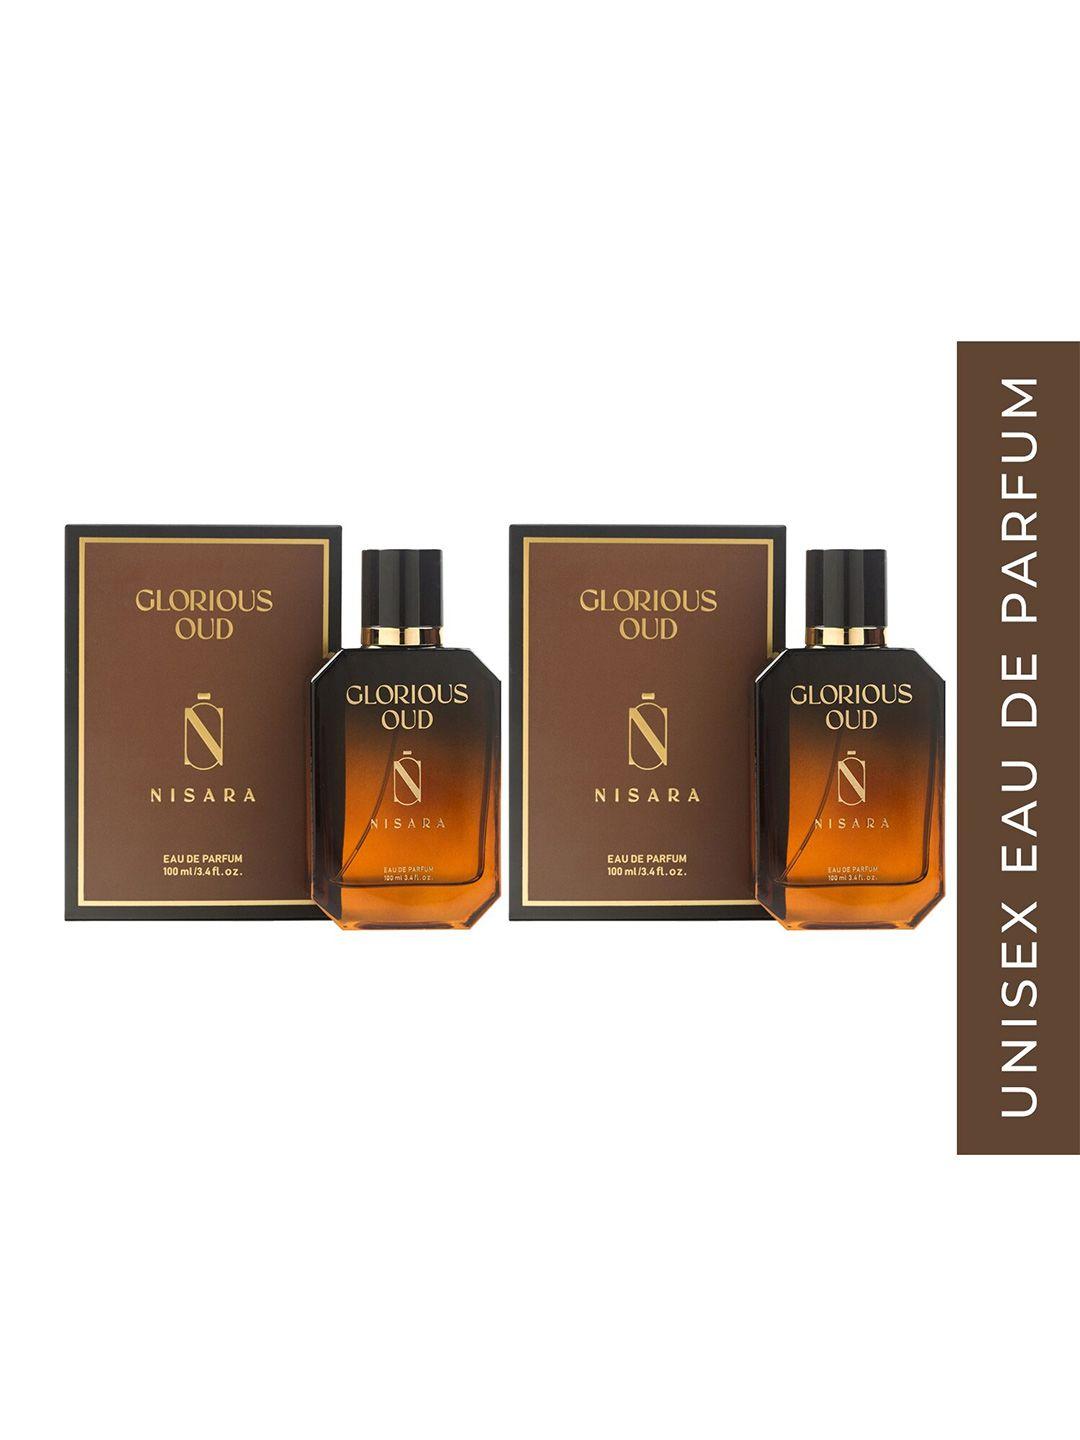 nisara set of 2 glorious oud fragrance eau de parfum - 100ml each